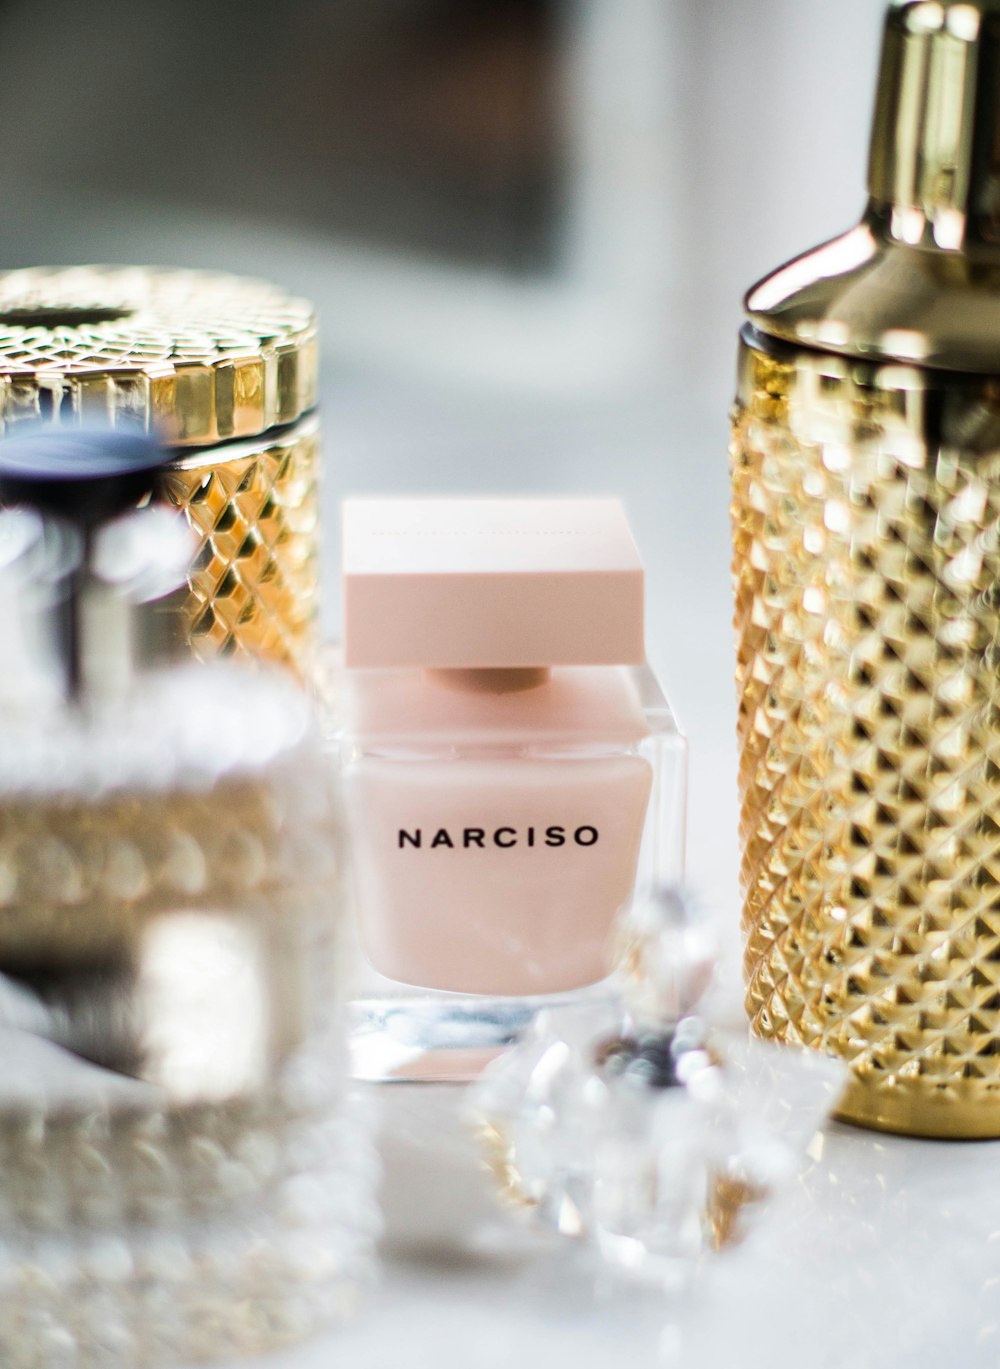 Narciso perfume bottle